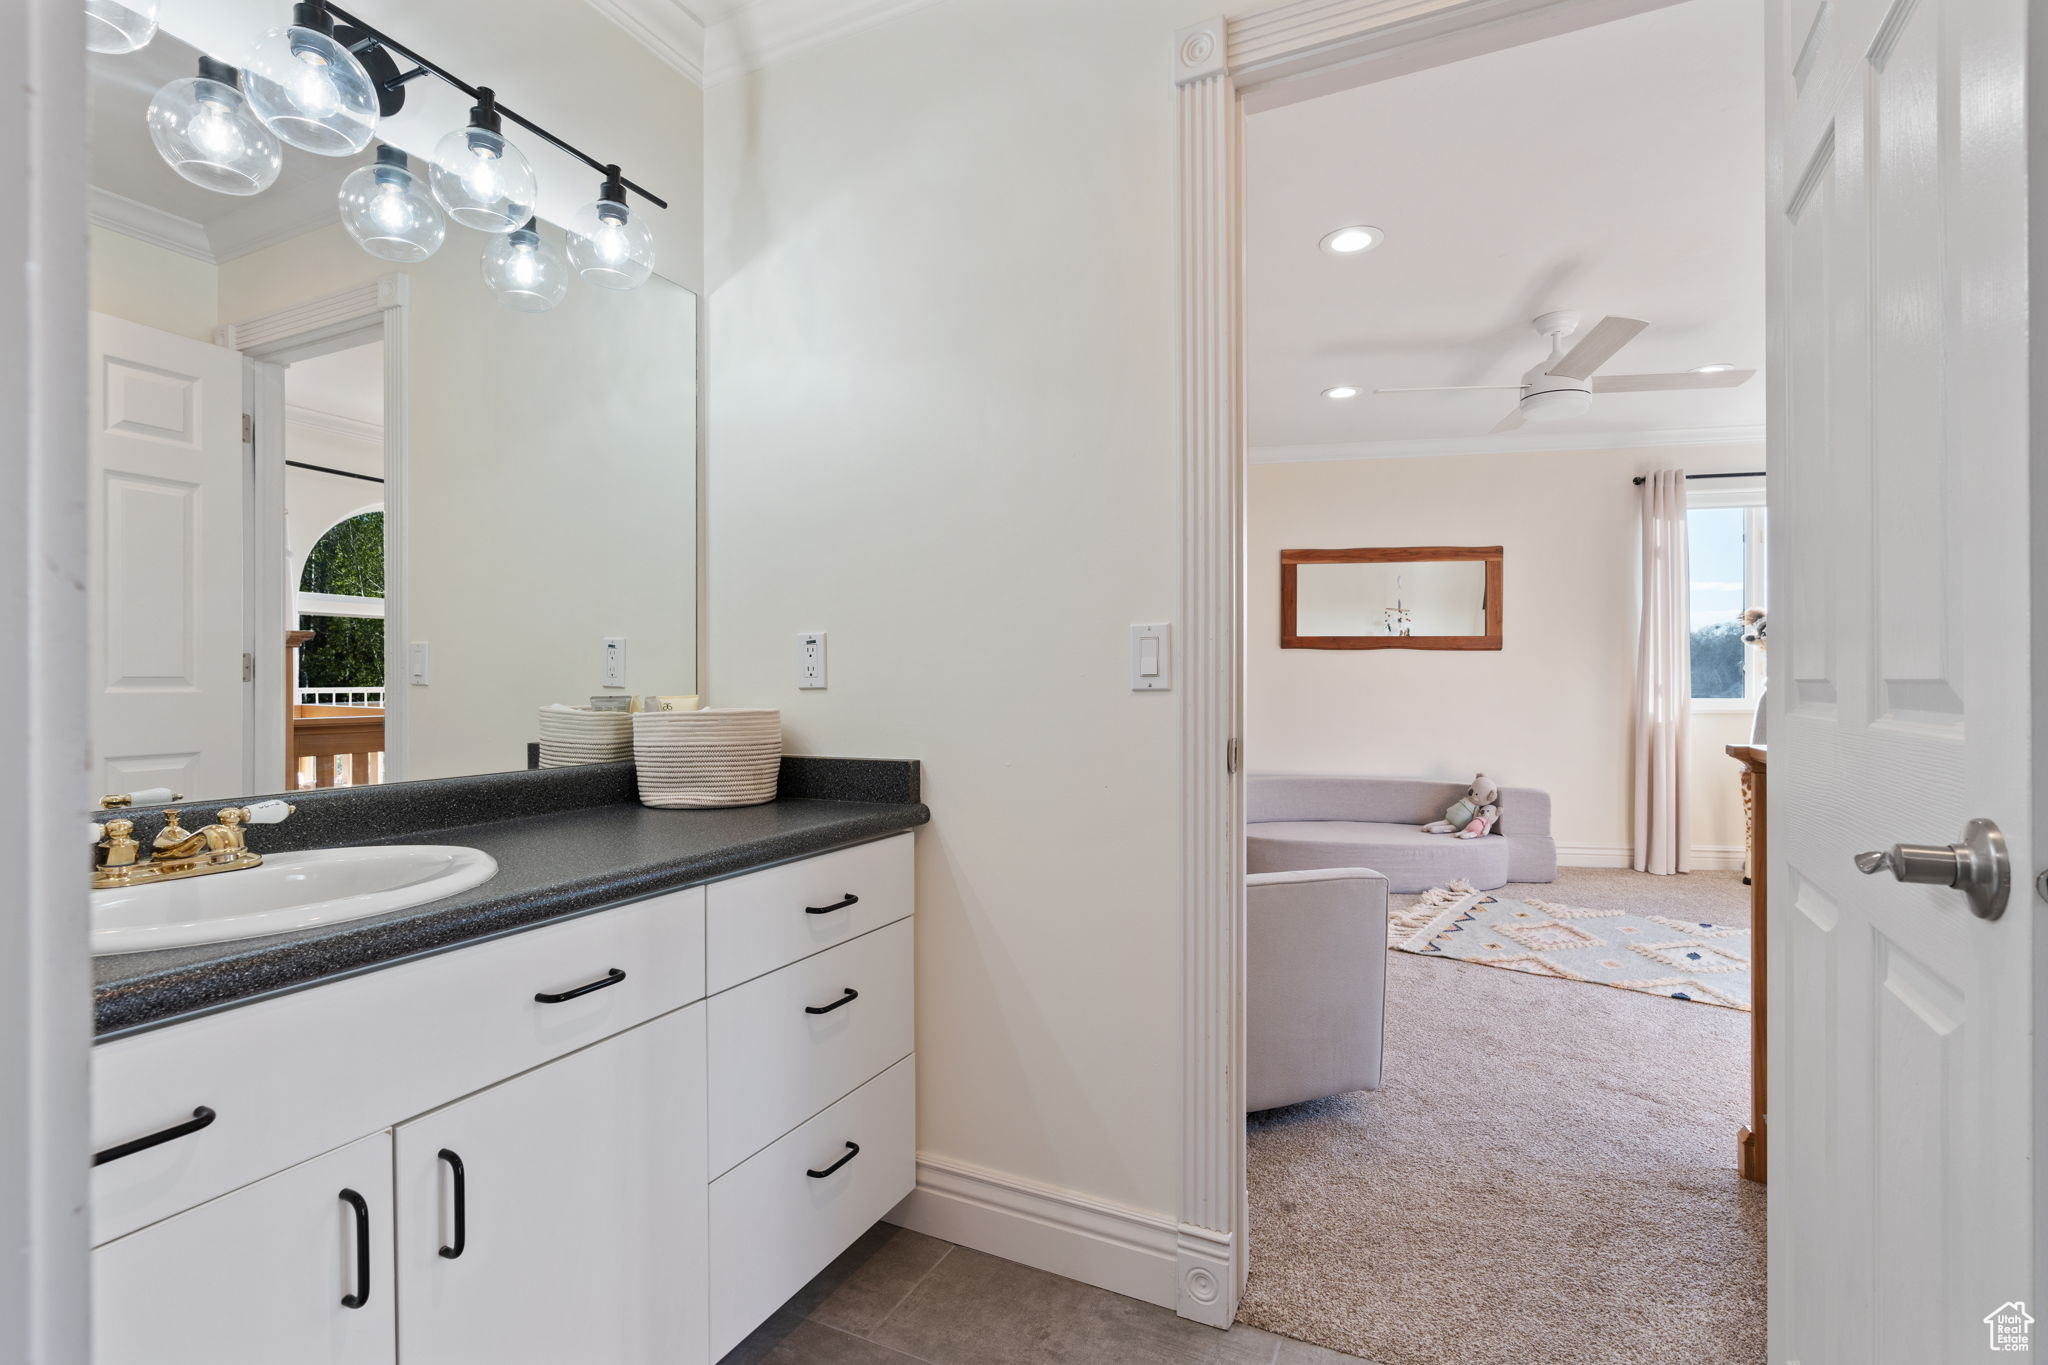 Bathroom with ornamental molding, ceiling fan, vanity, and tile floors